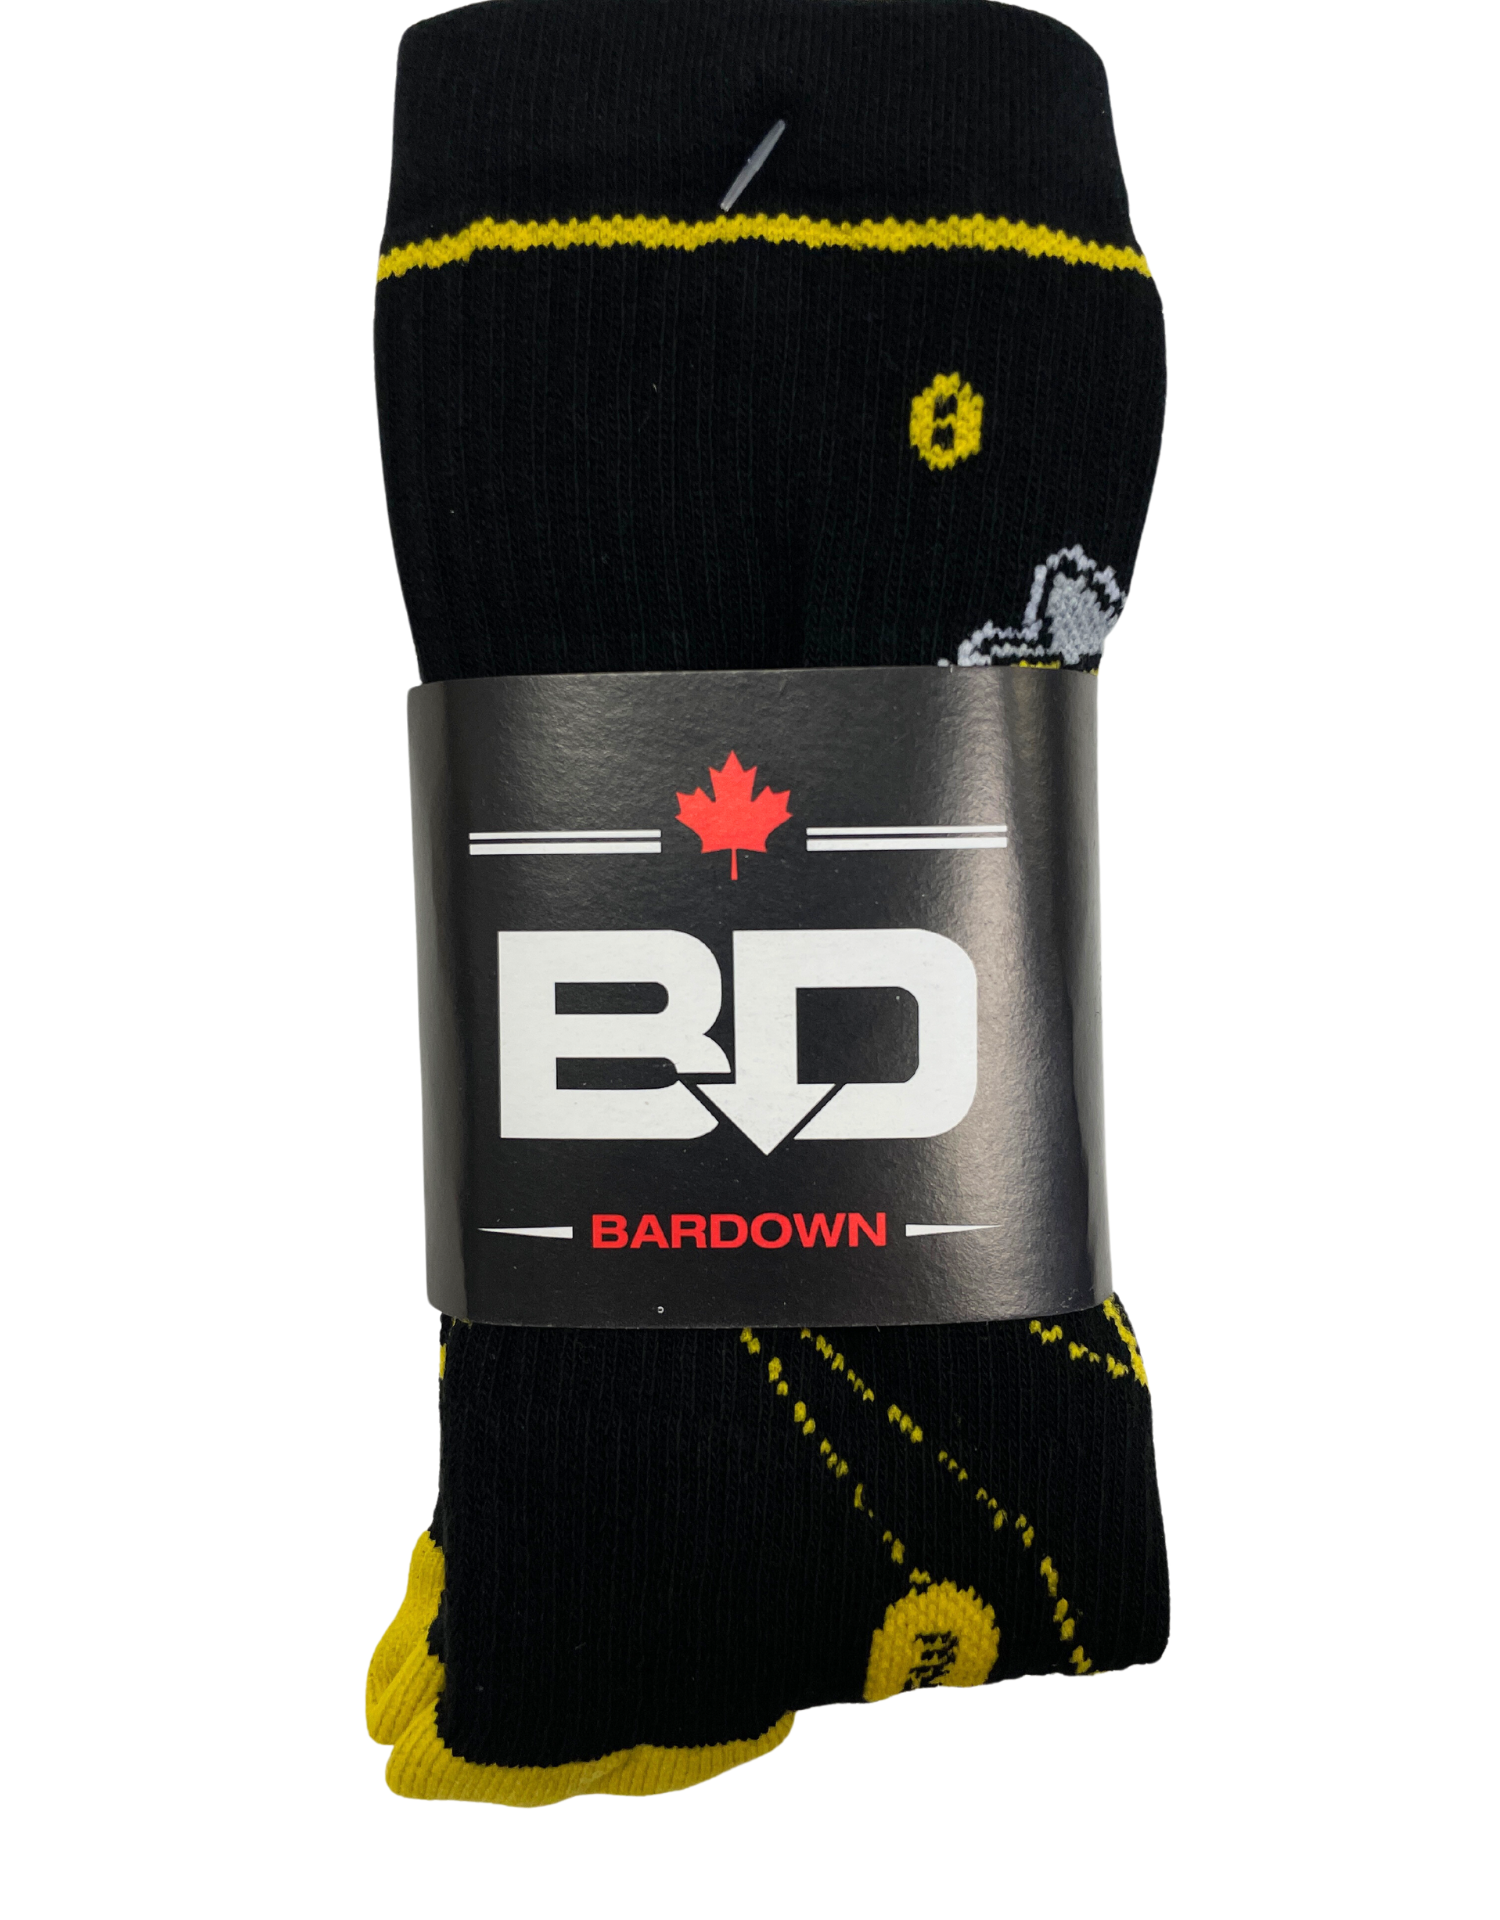 Bardown Athletic Socks (NEW)